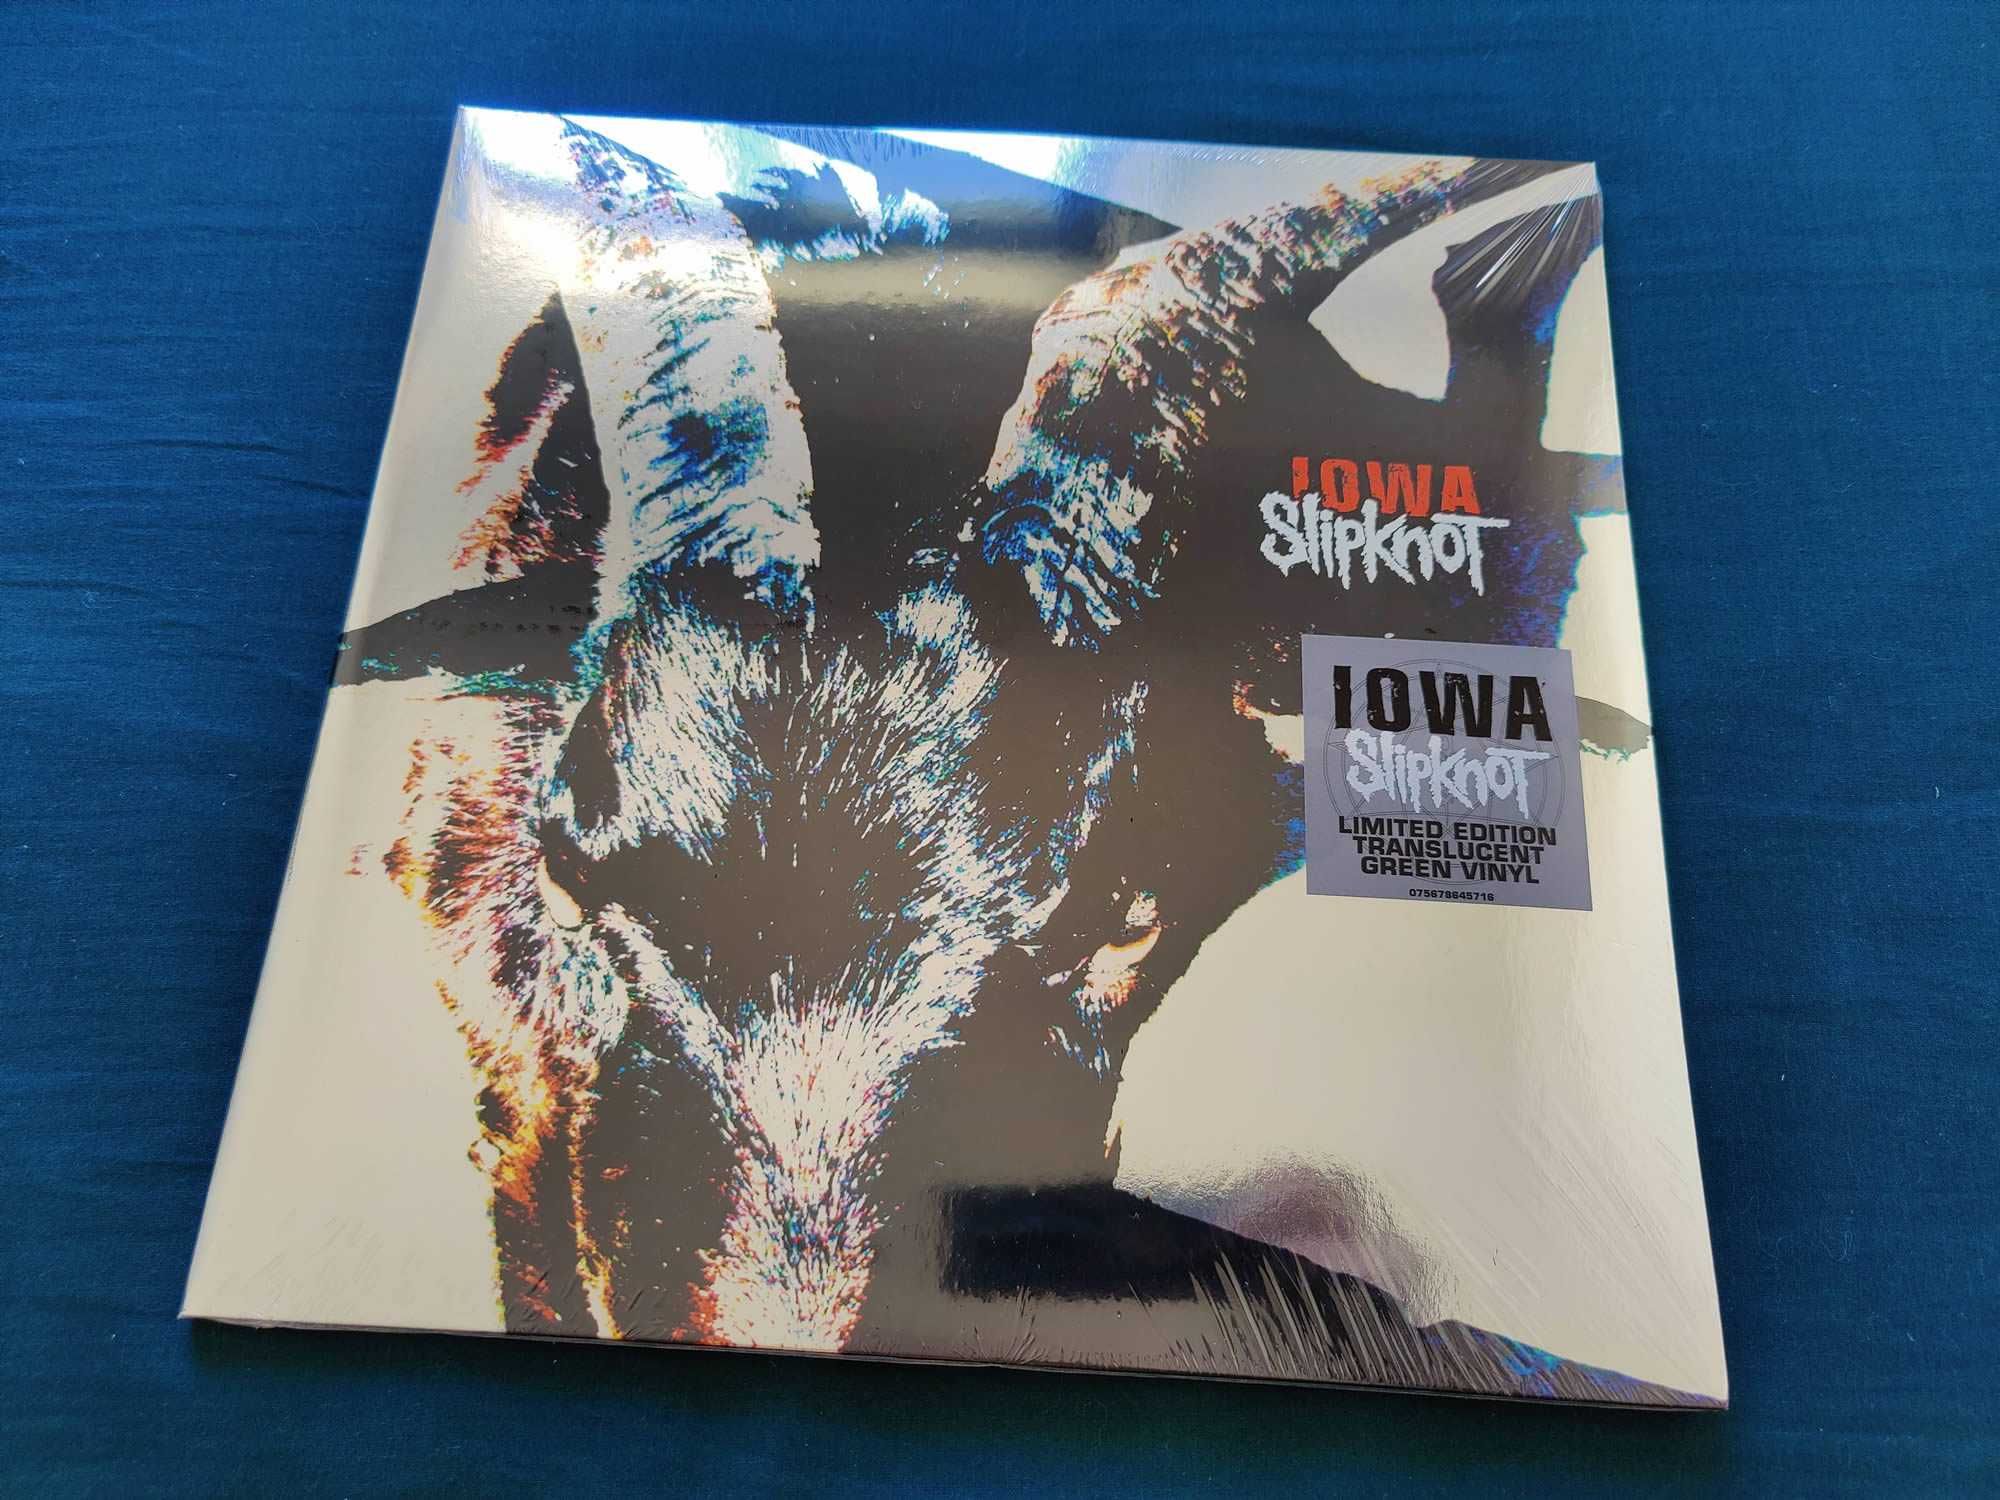 Slipknot IOWA - Vinil verde translúcido - Limited Edition [NOVO]